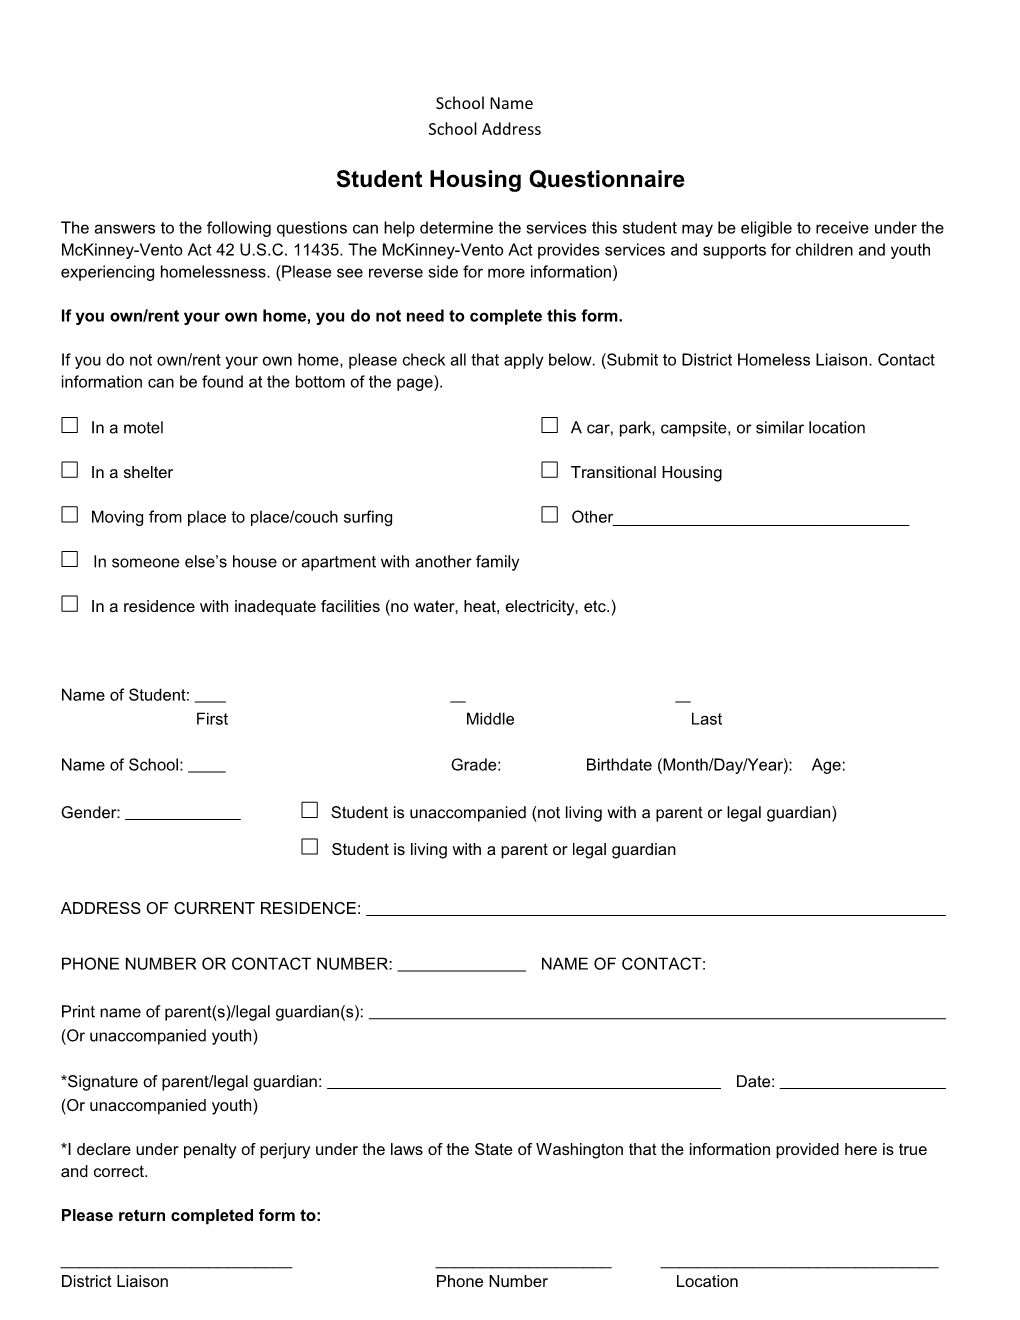 Student Housing Questionnaire